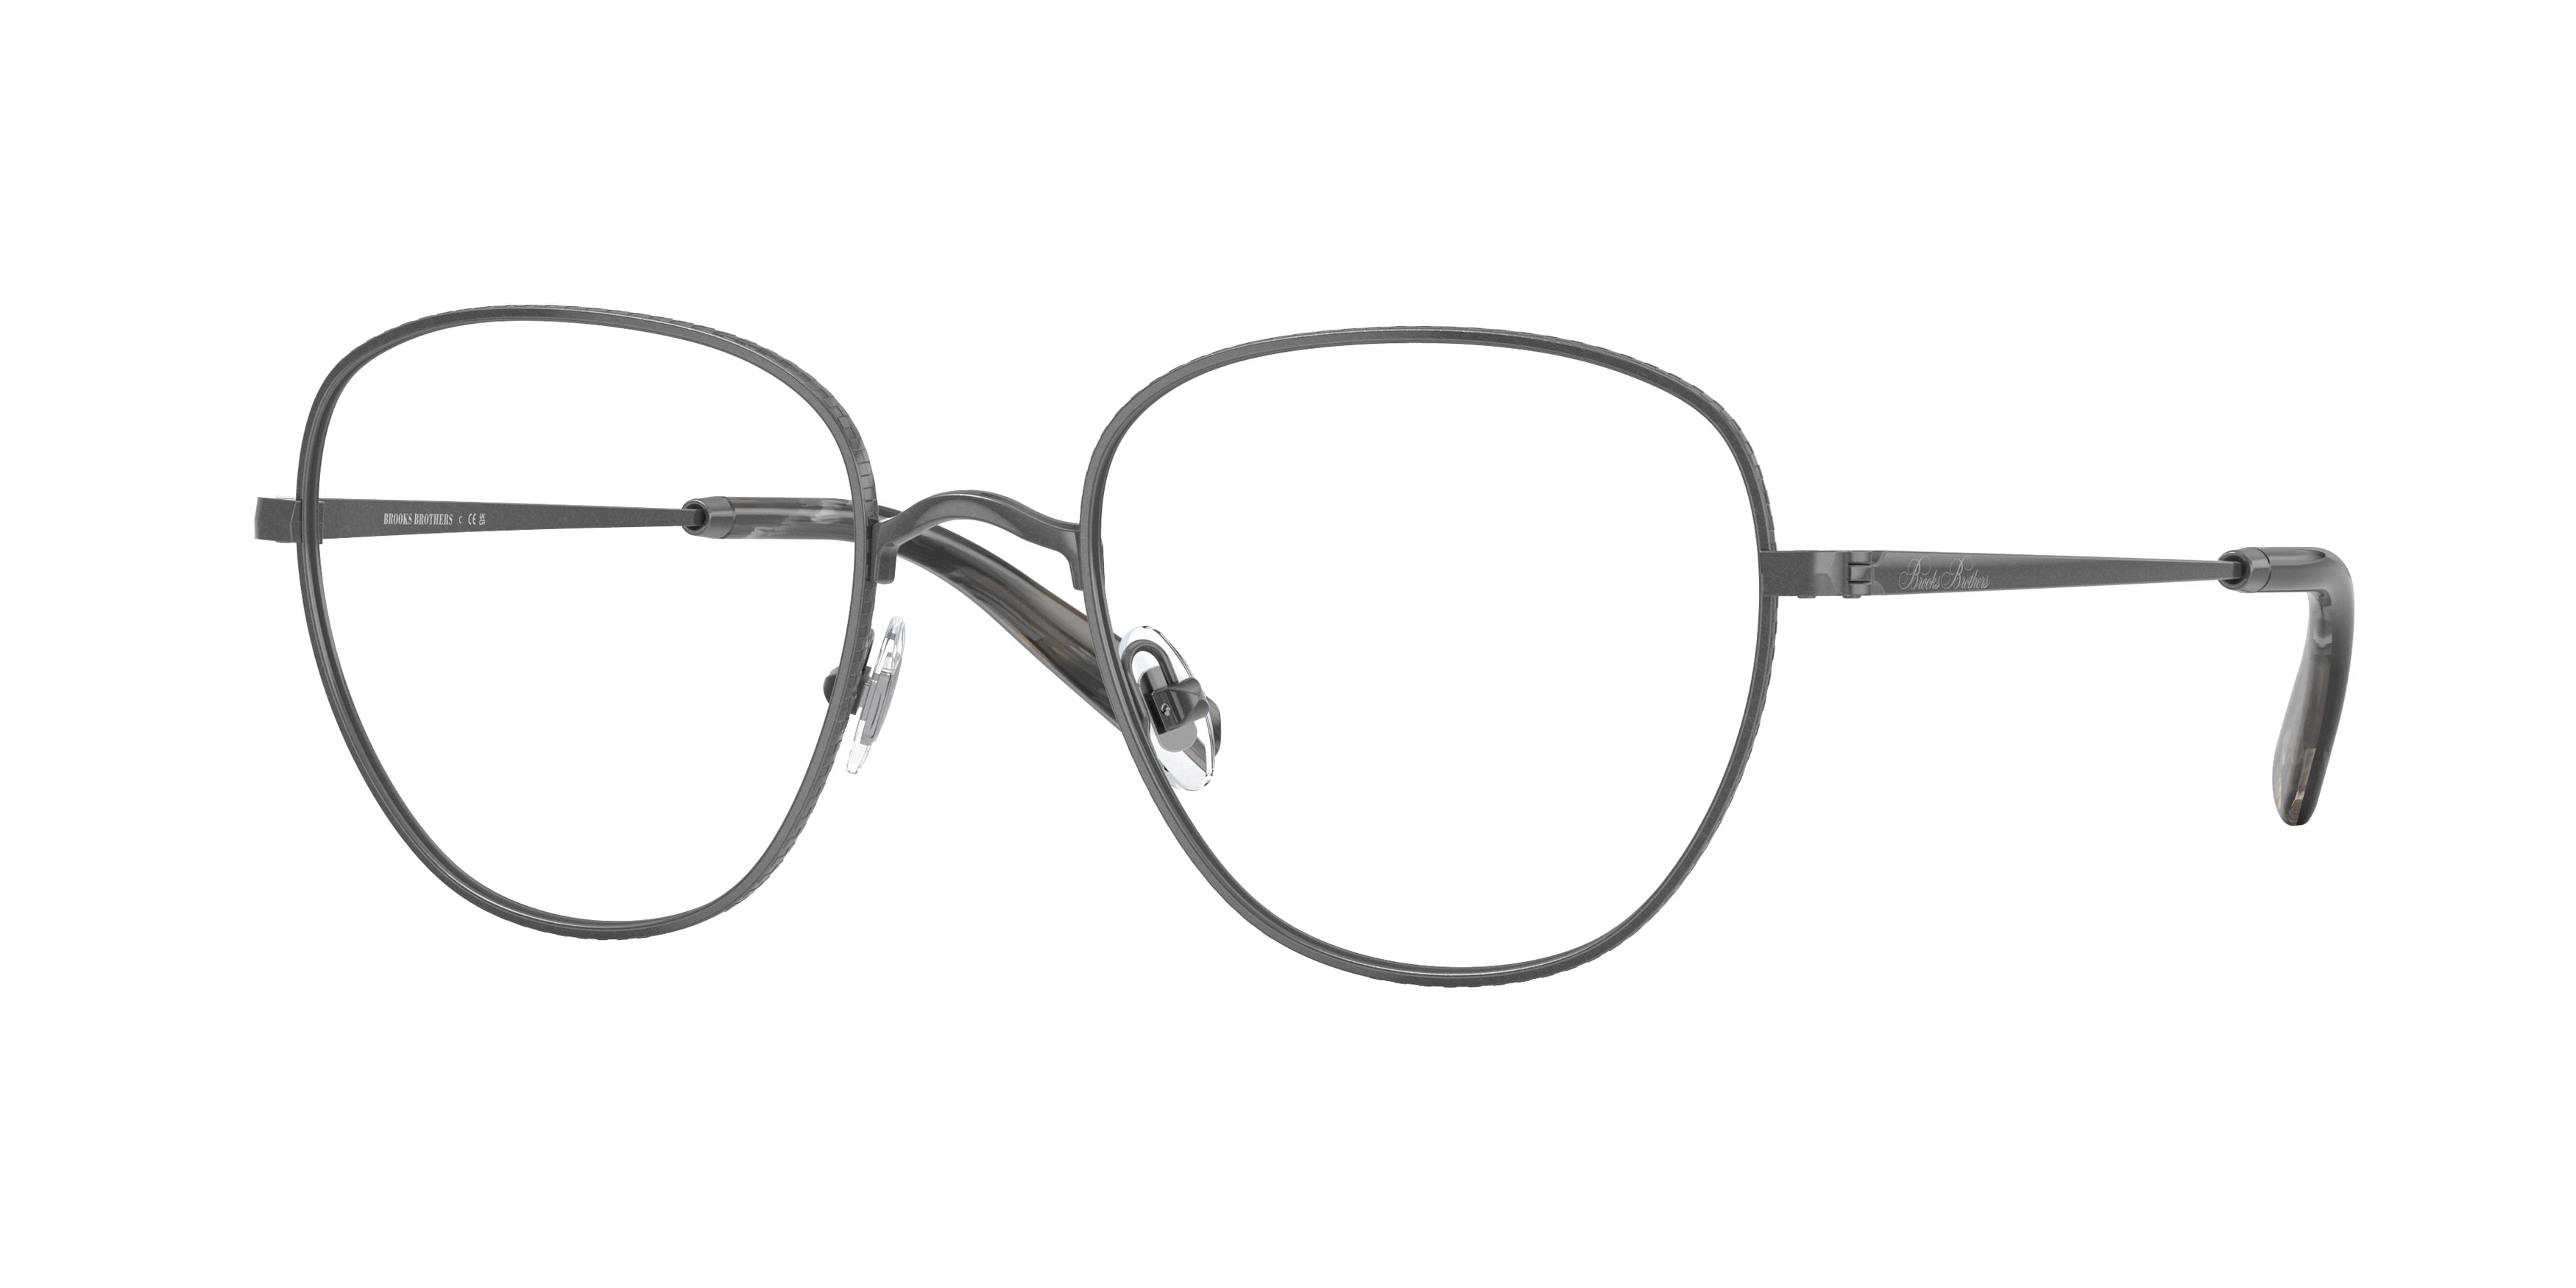 Brooks Brothers BB1103 Round Eyeglasses